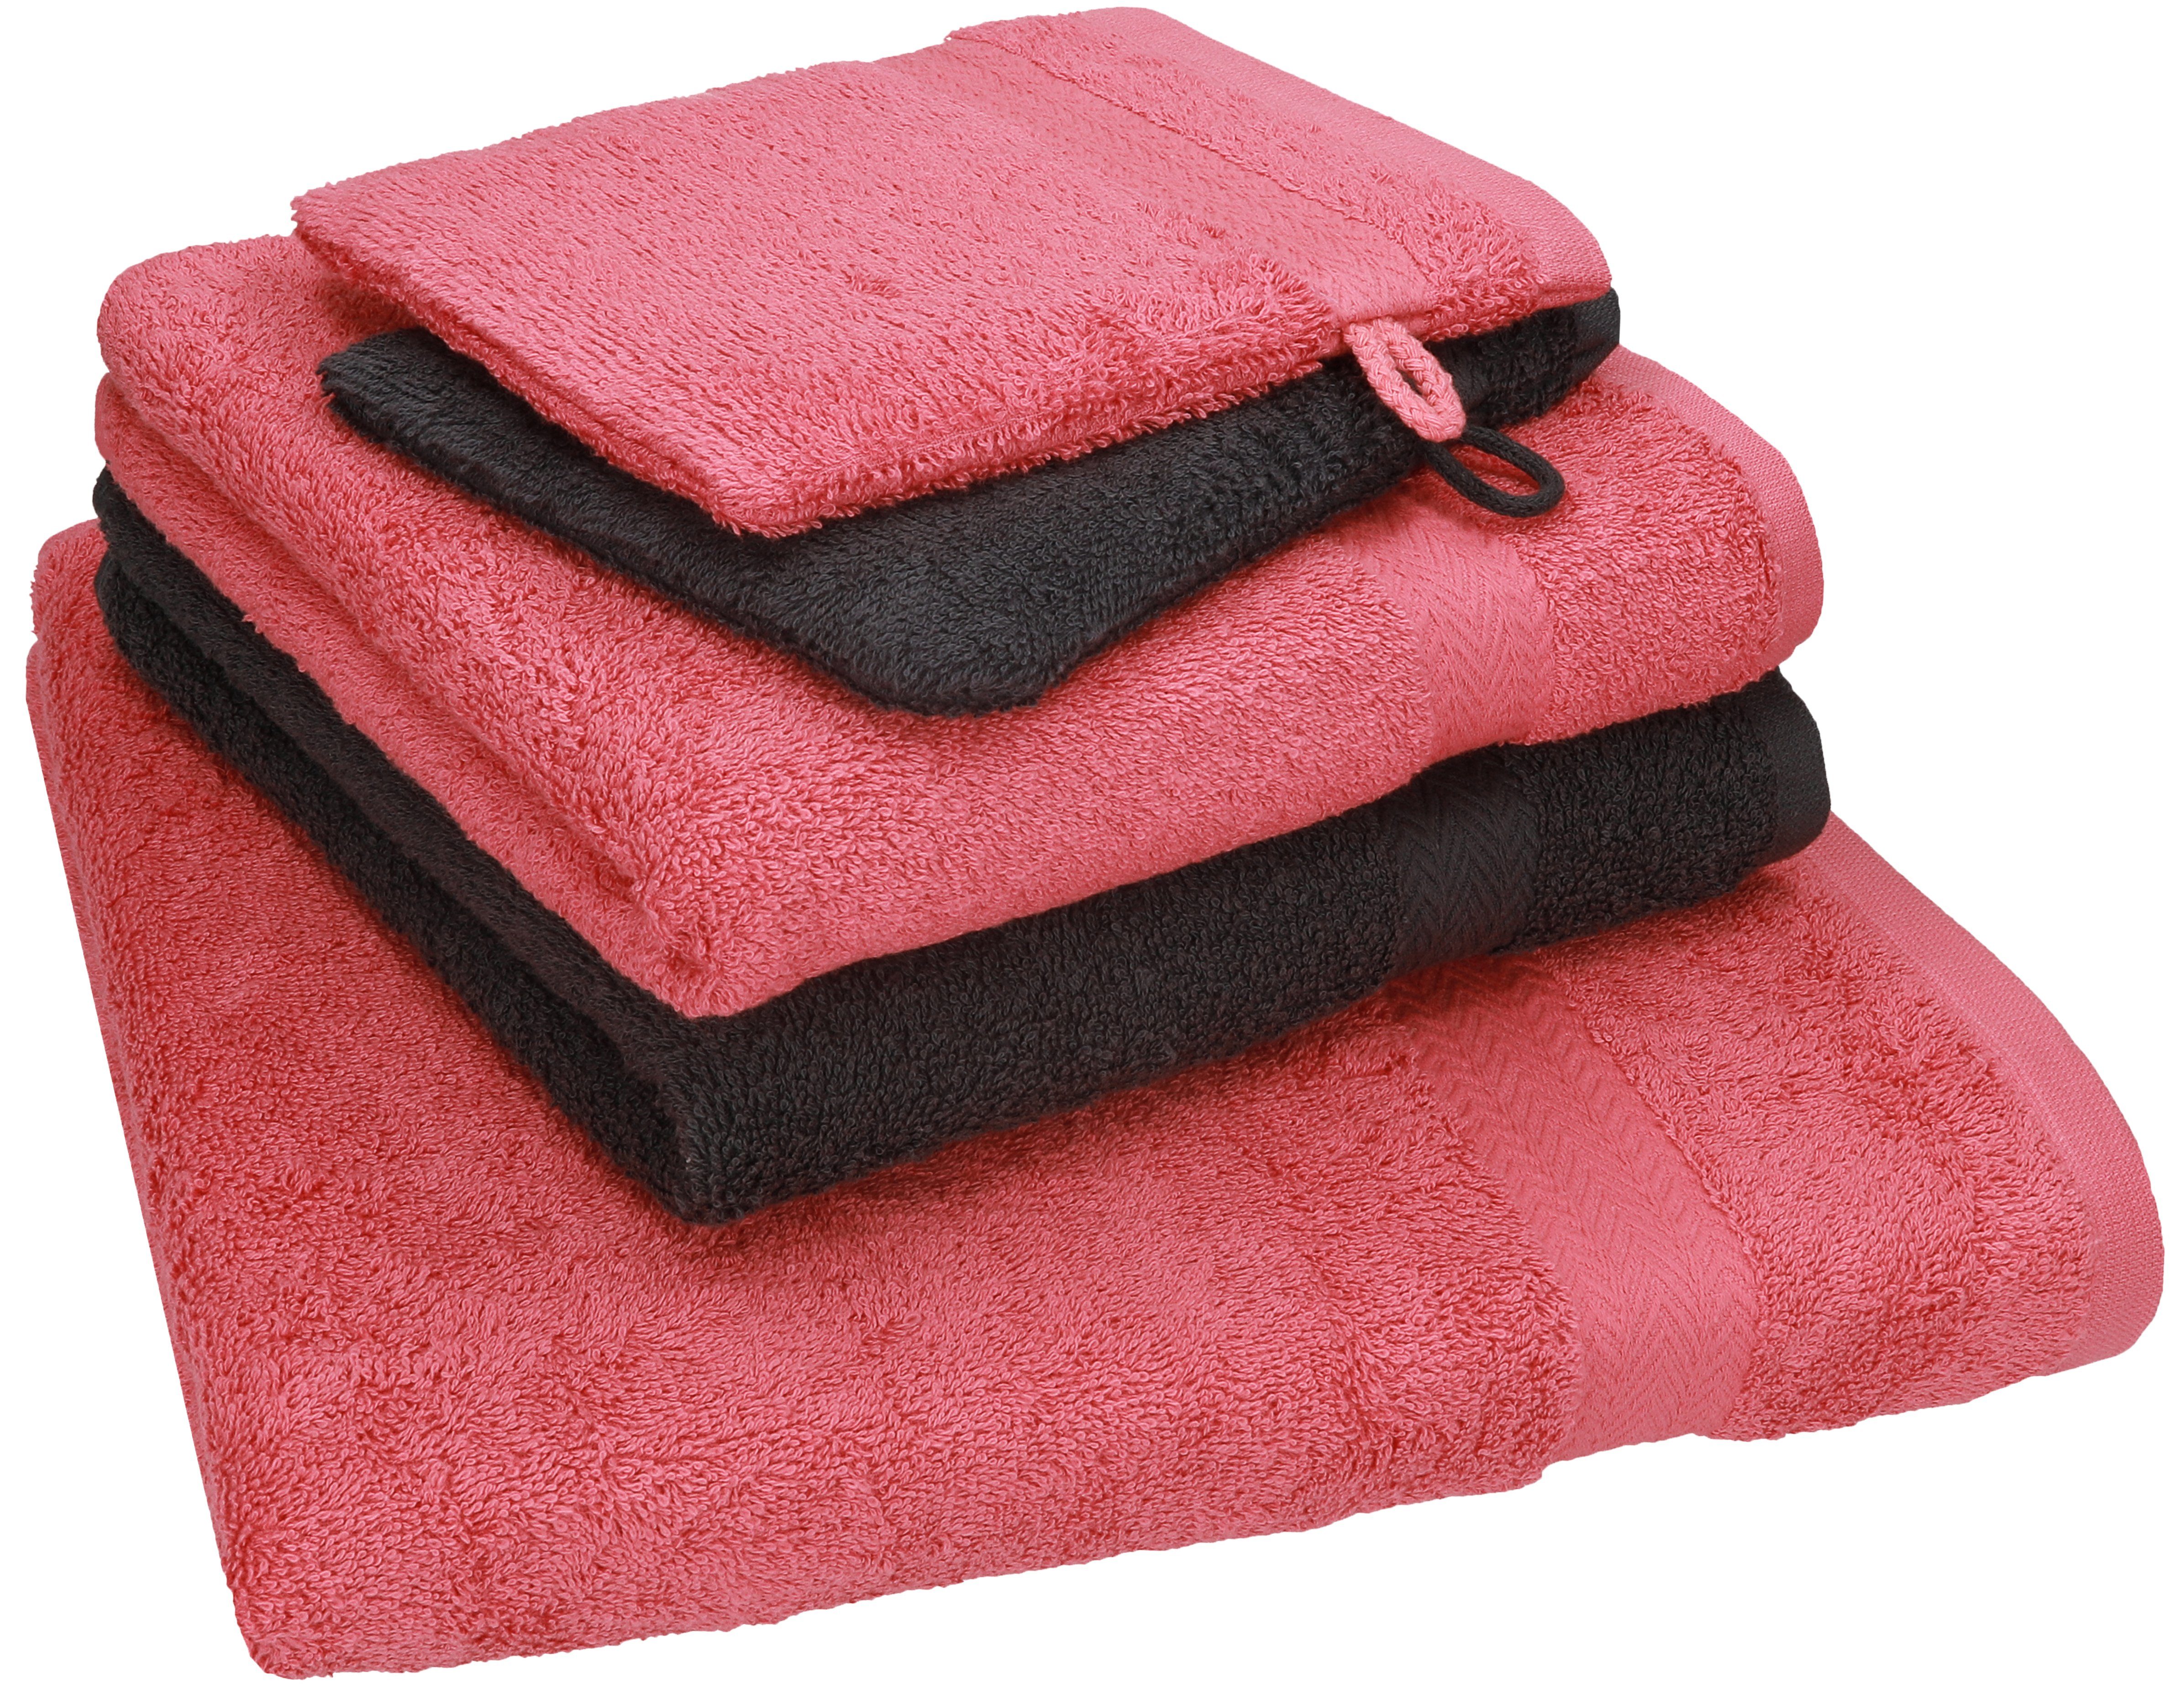 2 100% grau Set Single 100% Set Handtücher Baumwolle himbeere-graphit Handtuch 5 Betz Waschhandschuhe, TLG. Duschtuch Baumwolle 2 Handtuch 1 Pack